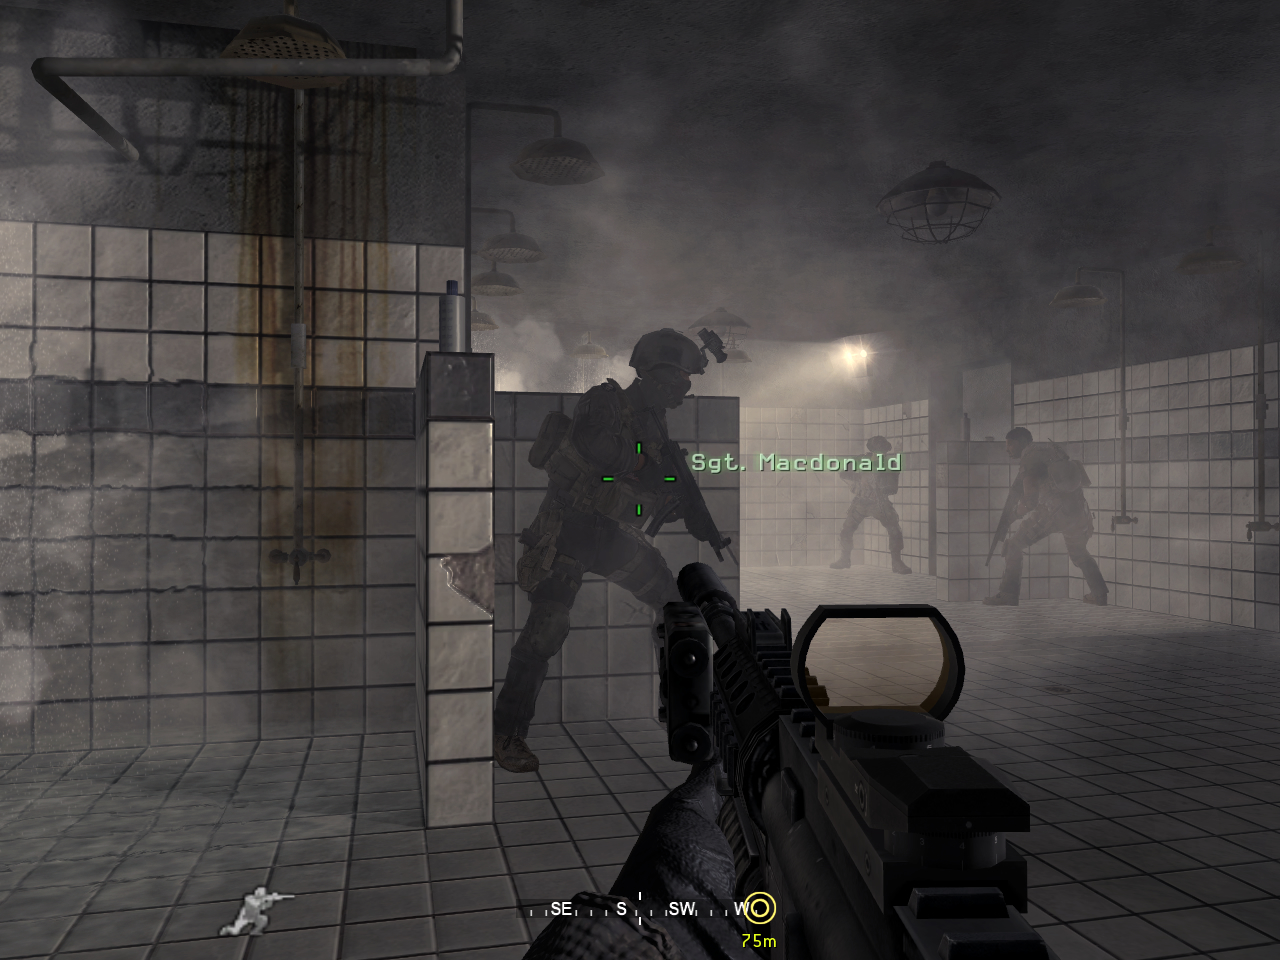 Activision. 2008. «Friend» [Capture d’écran: Jeu vidéo]
Capture d’écran de «Call of Duty 4: Modern Warfare».
